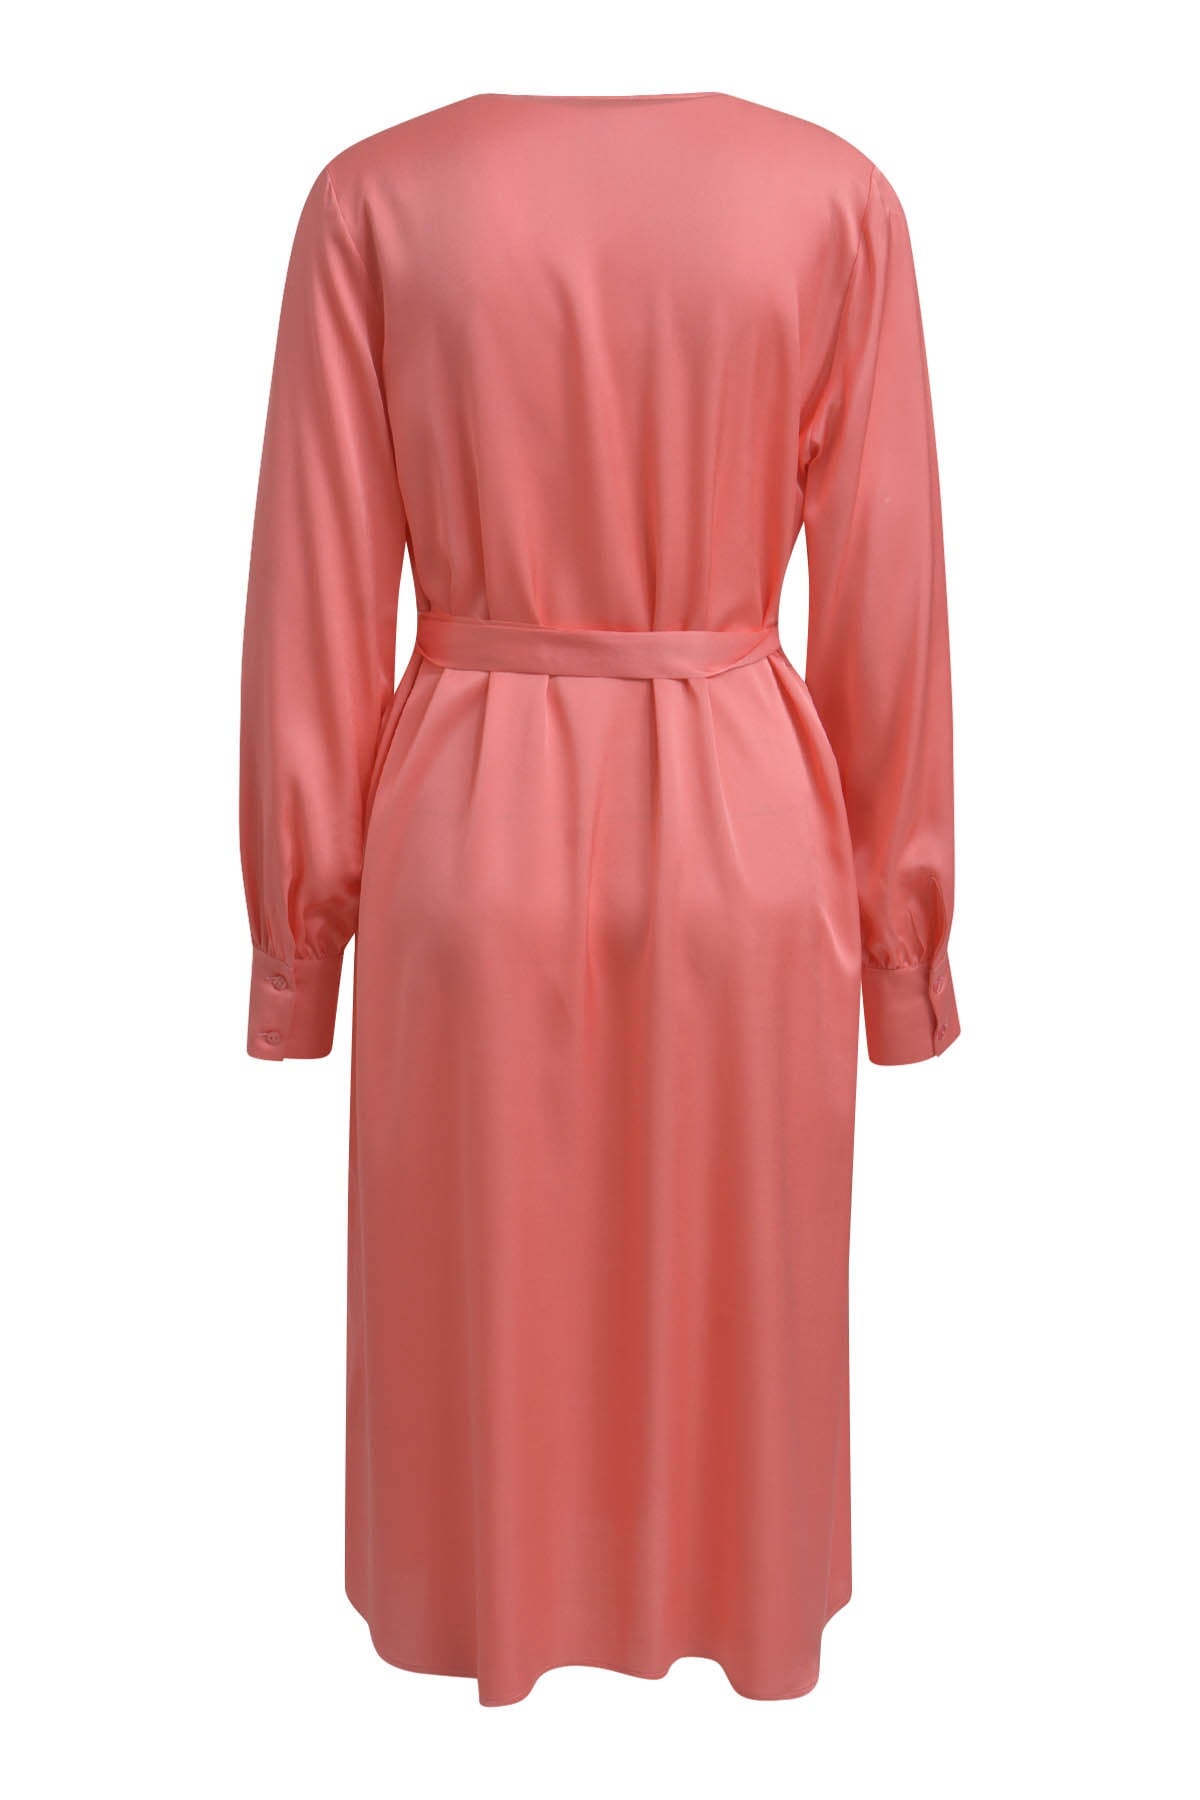 Kleid Midikleid mit Wickeloptik und Bindegürtel Flamingo Kleid Milano 